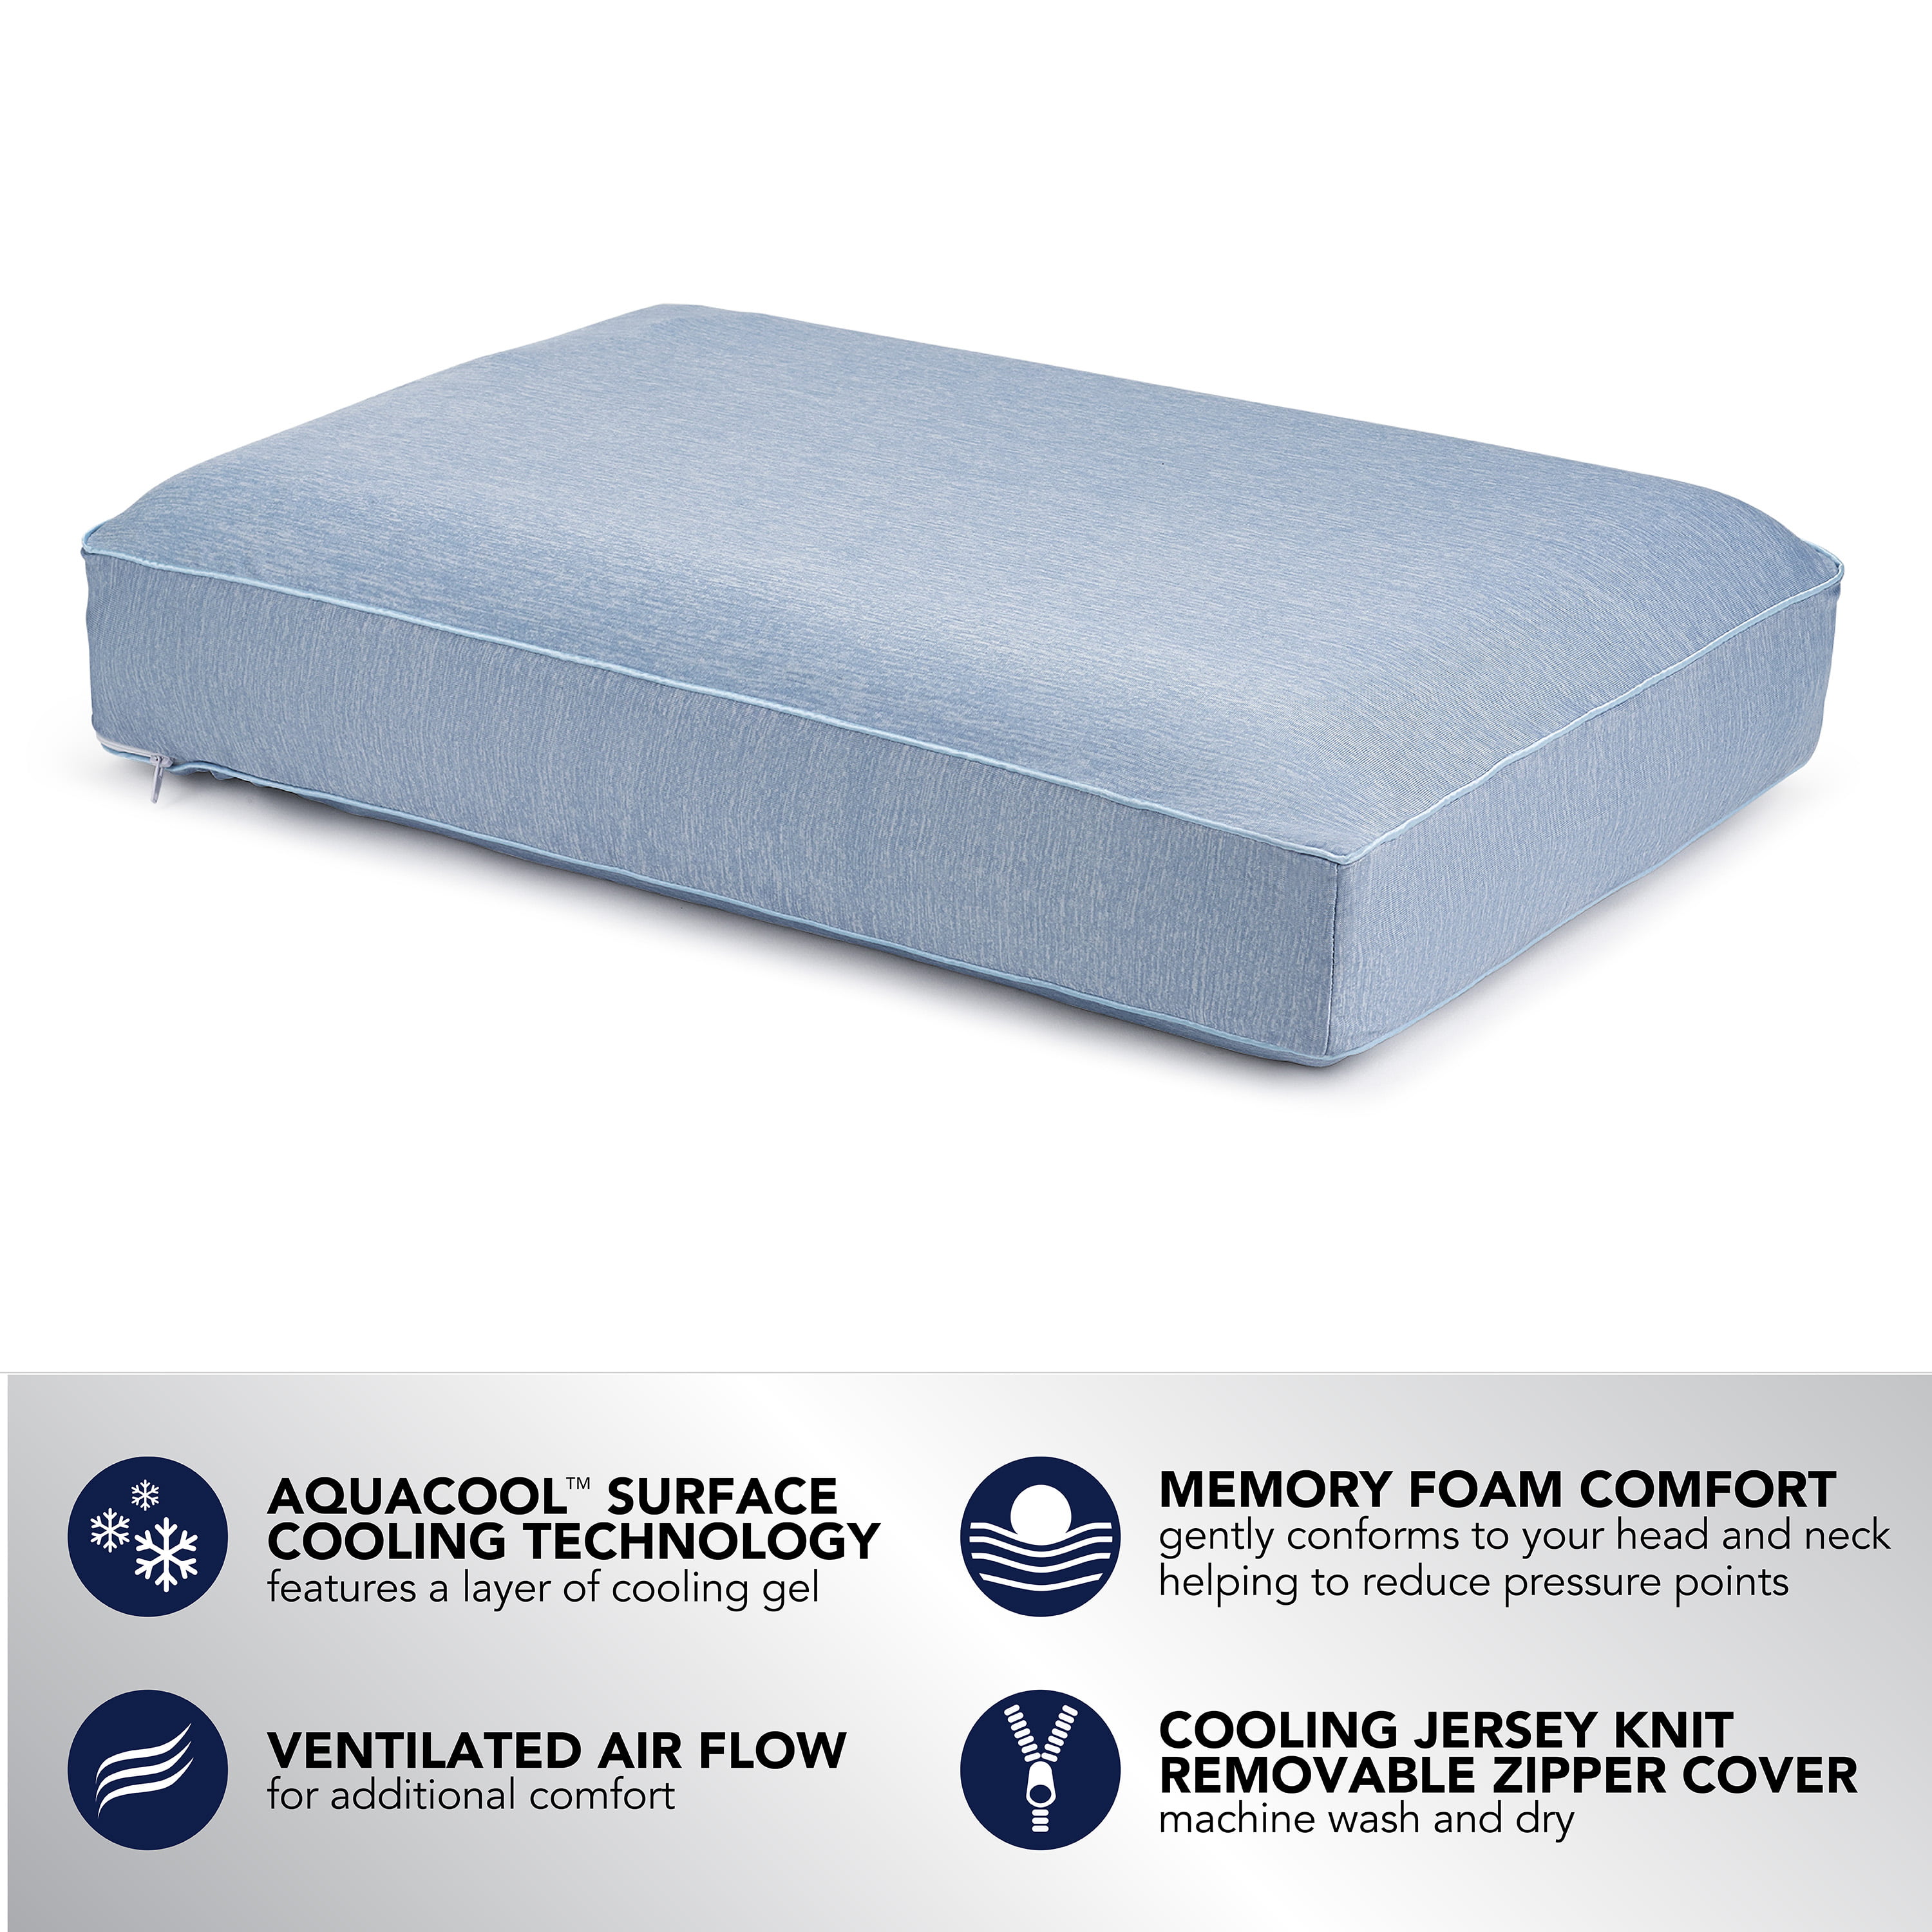 beautyrest silver aquacool memory foam pillow